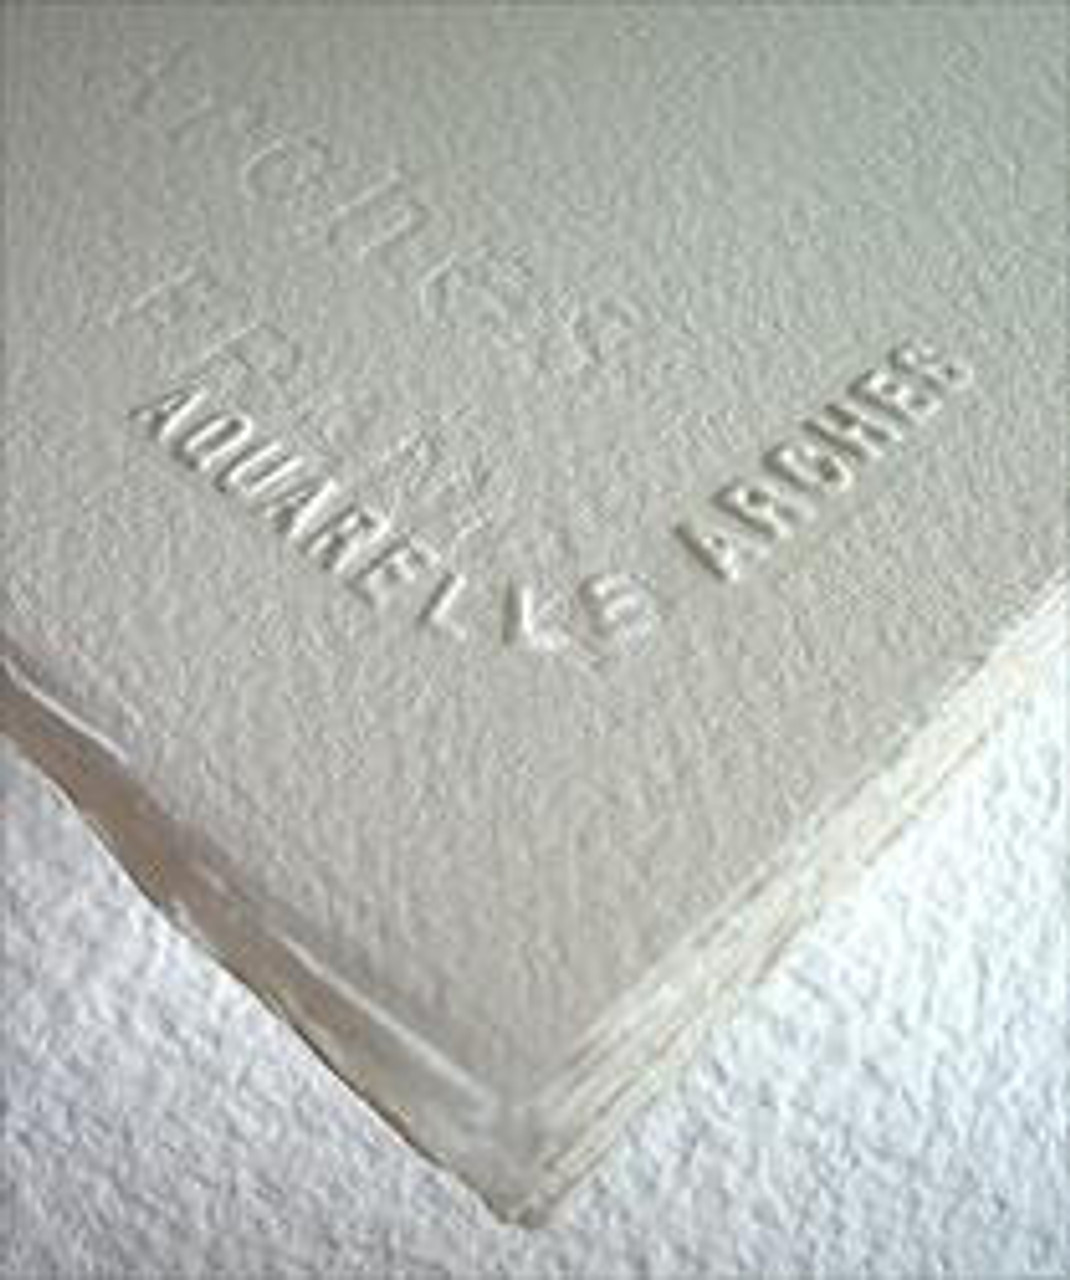 Arches Natural White Watercolor Paper - Hot Press, 22 x 30, 140 lb,  Single Sheet